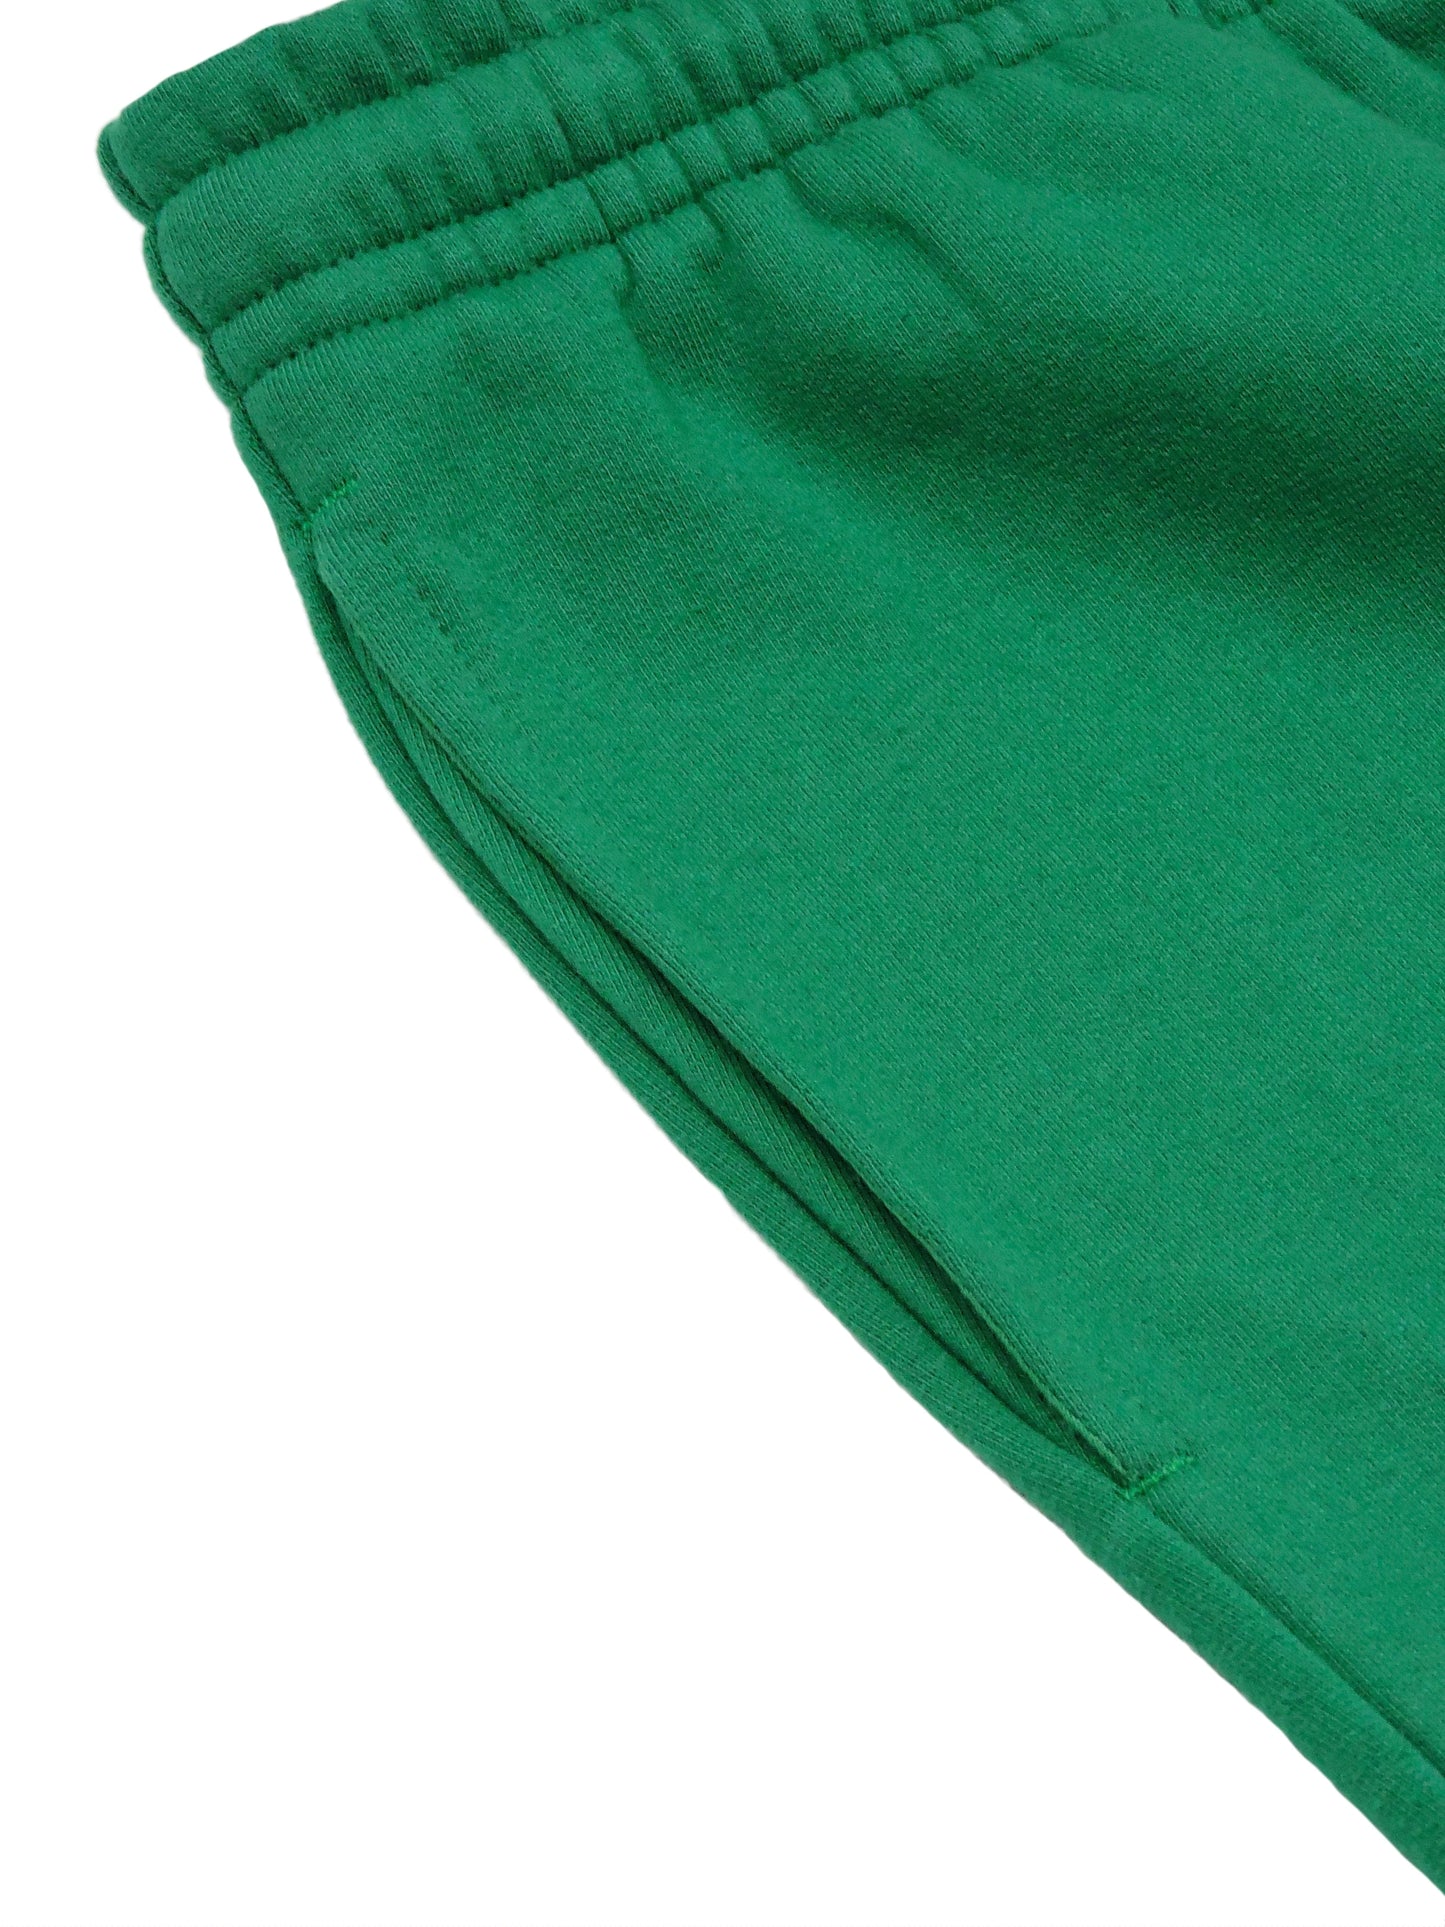 Close up of sweatpants pockets